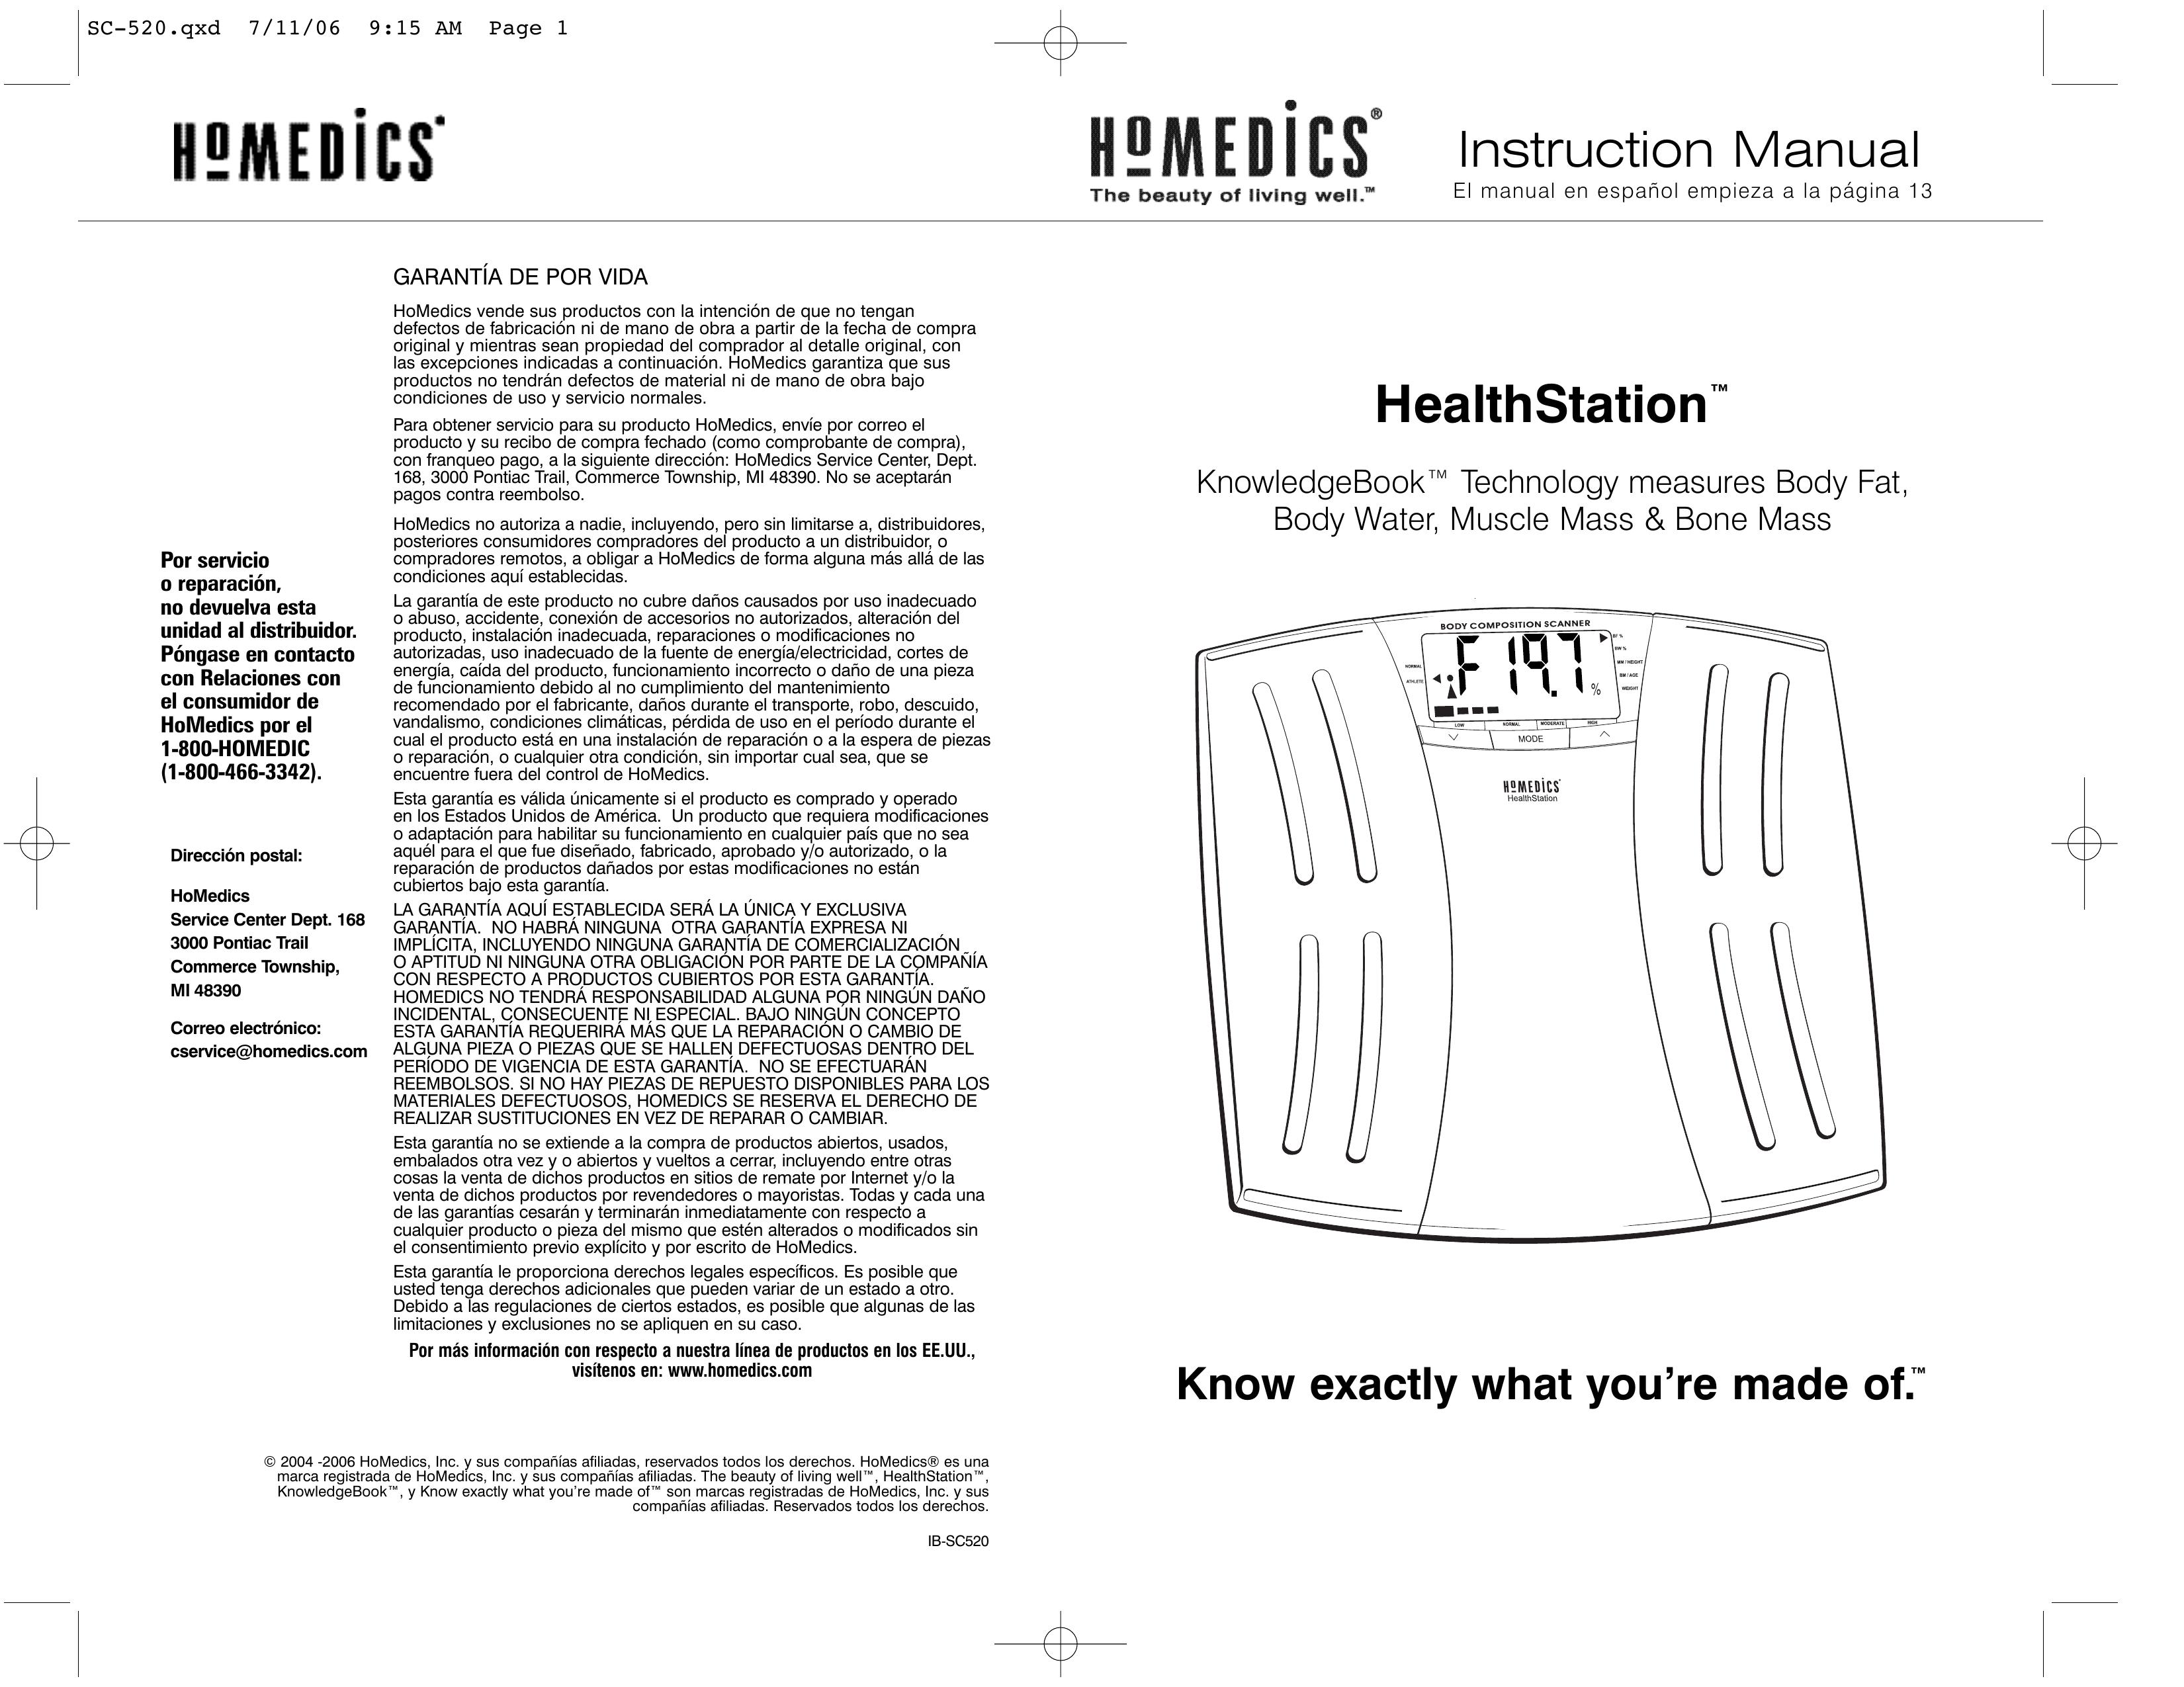 HoMedics IB-SC520 Scale User Manual